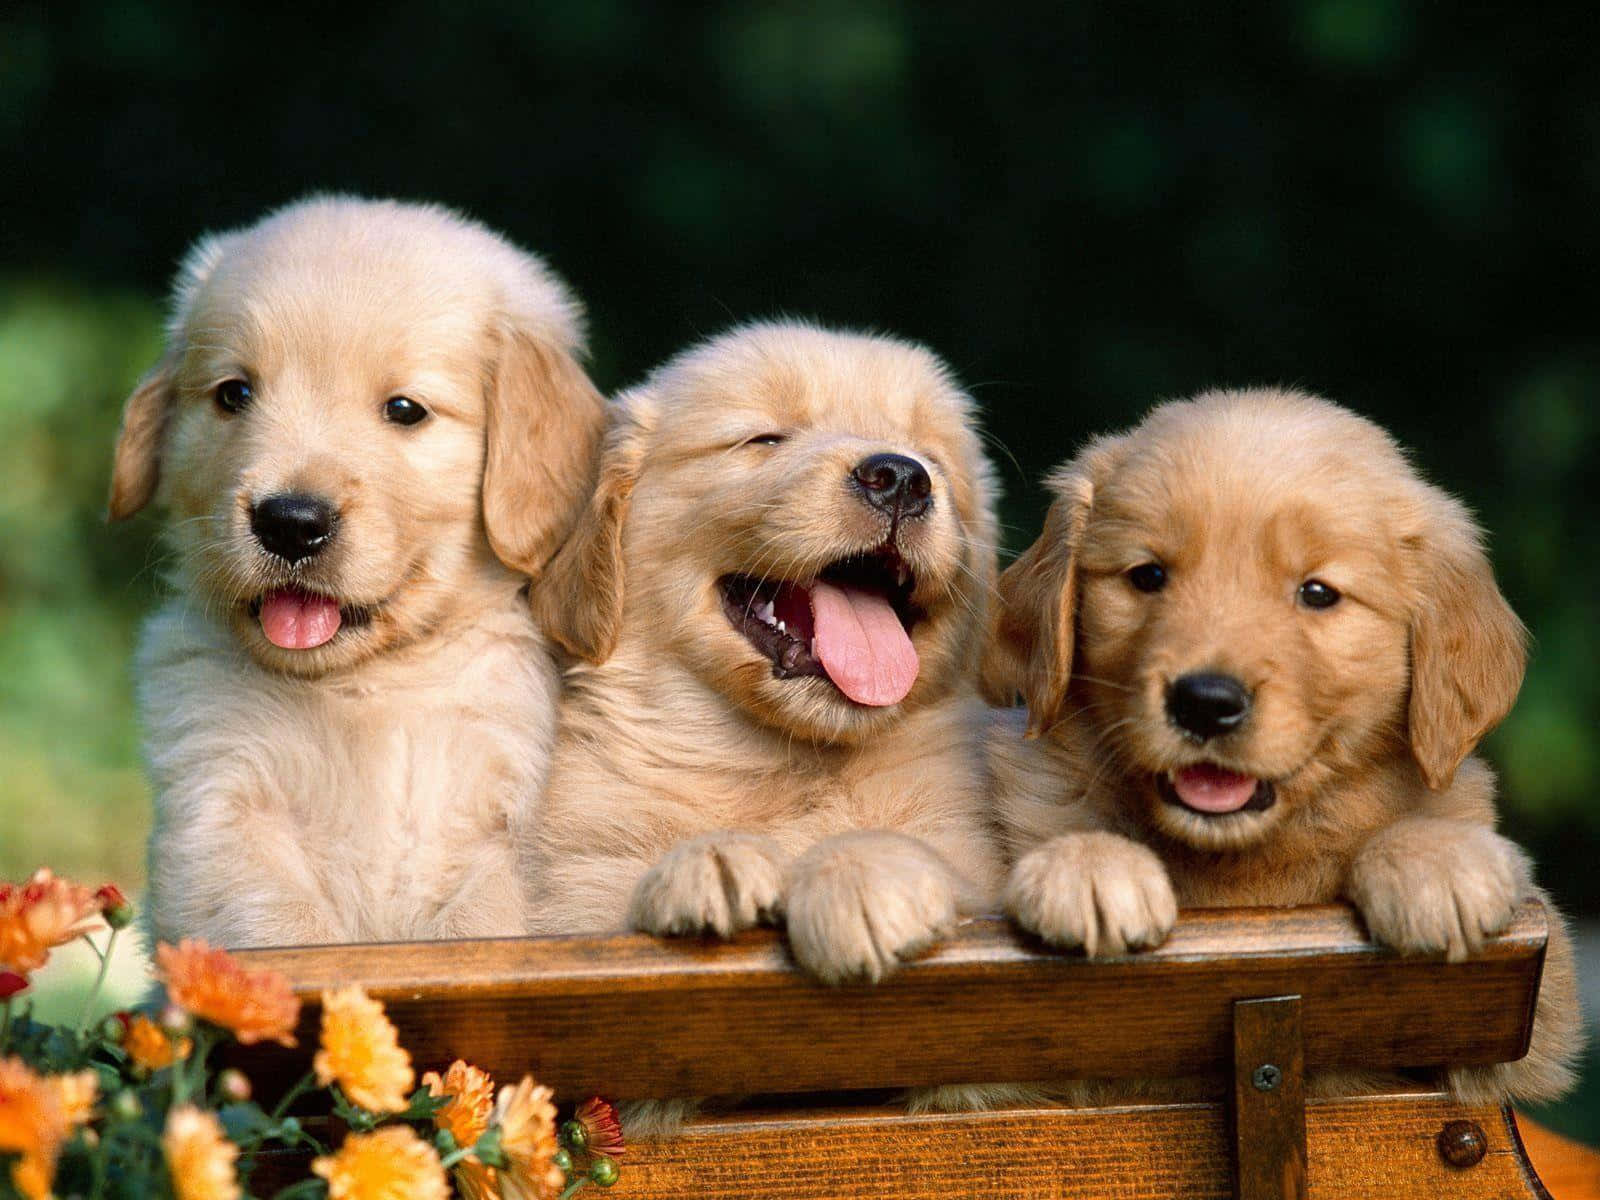 100+] Golden Retriever Puppy Wallpapers | Wallpapers.com